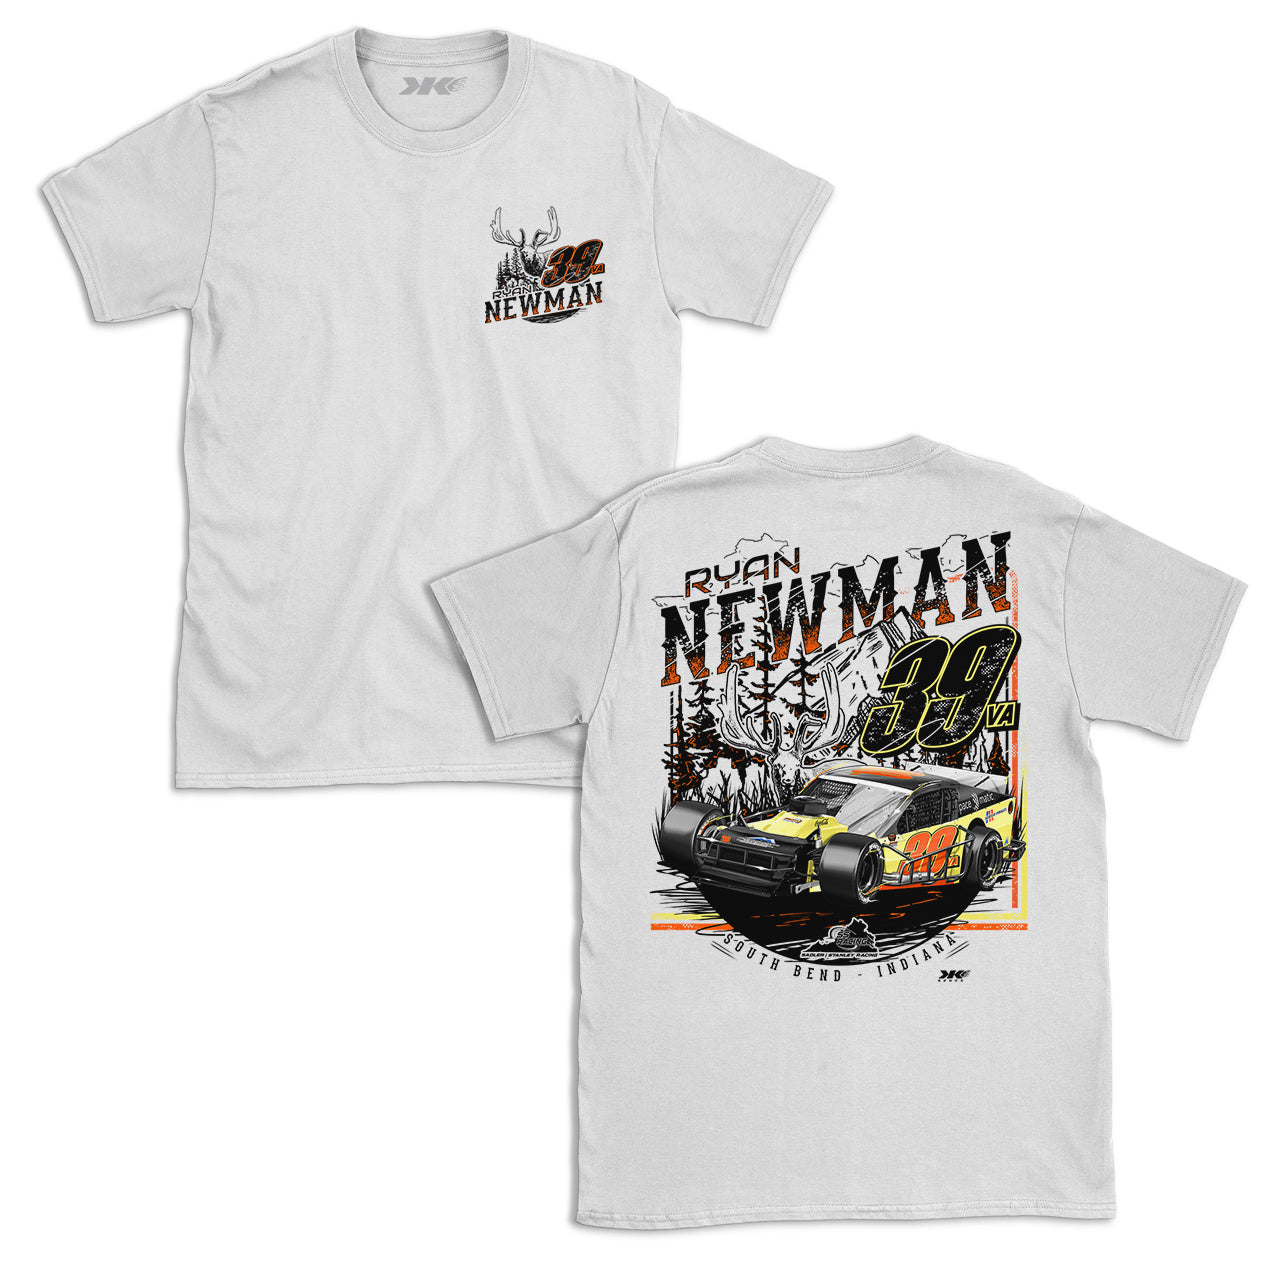 Ryan Newman Outdoor Buddy T-Shirt - White